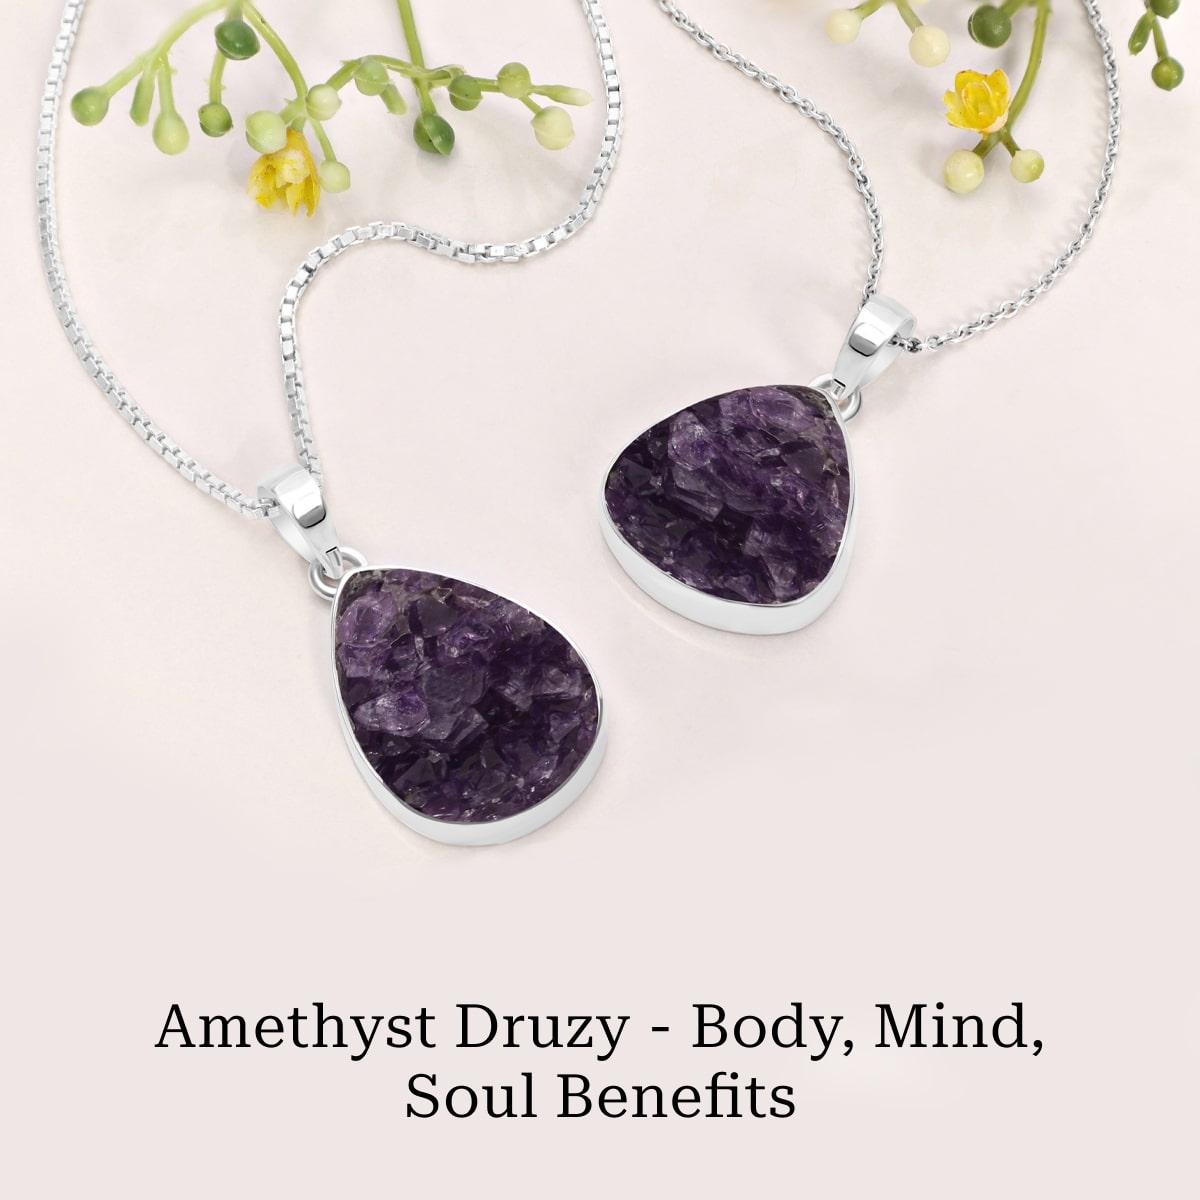 Benefits of Amethyst Druzy Crystal to Body, Mind & Soul